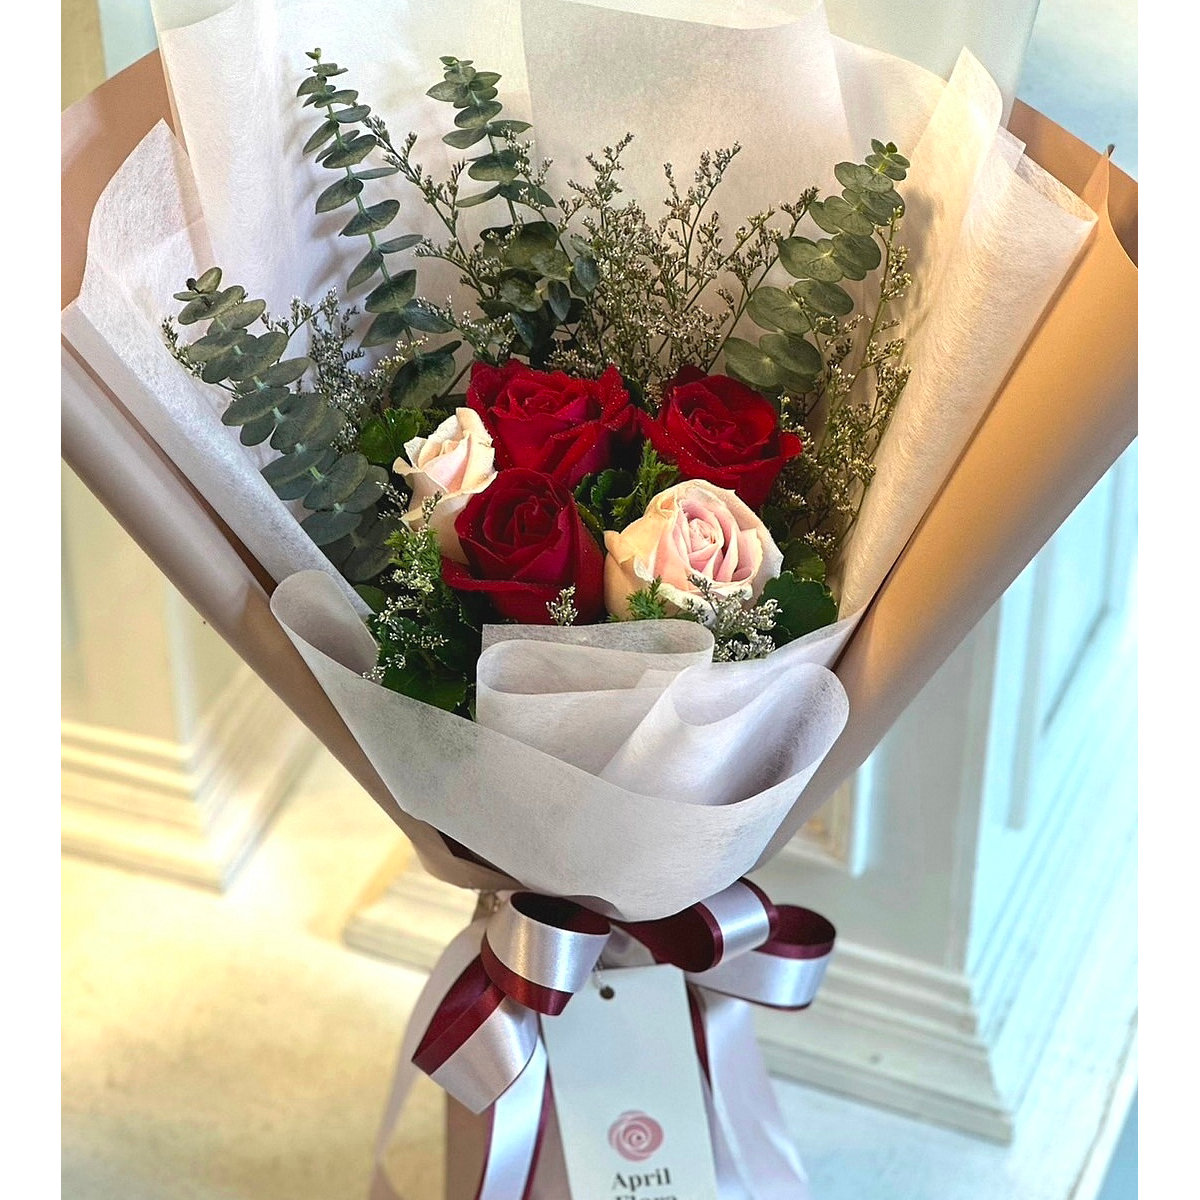 "Surprise" Bouquet Of Roses and Caspia - April Flora